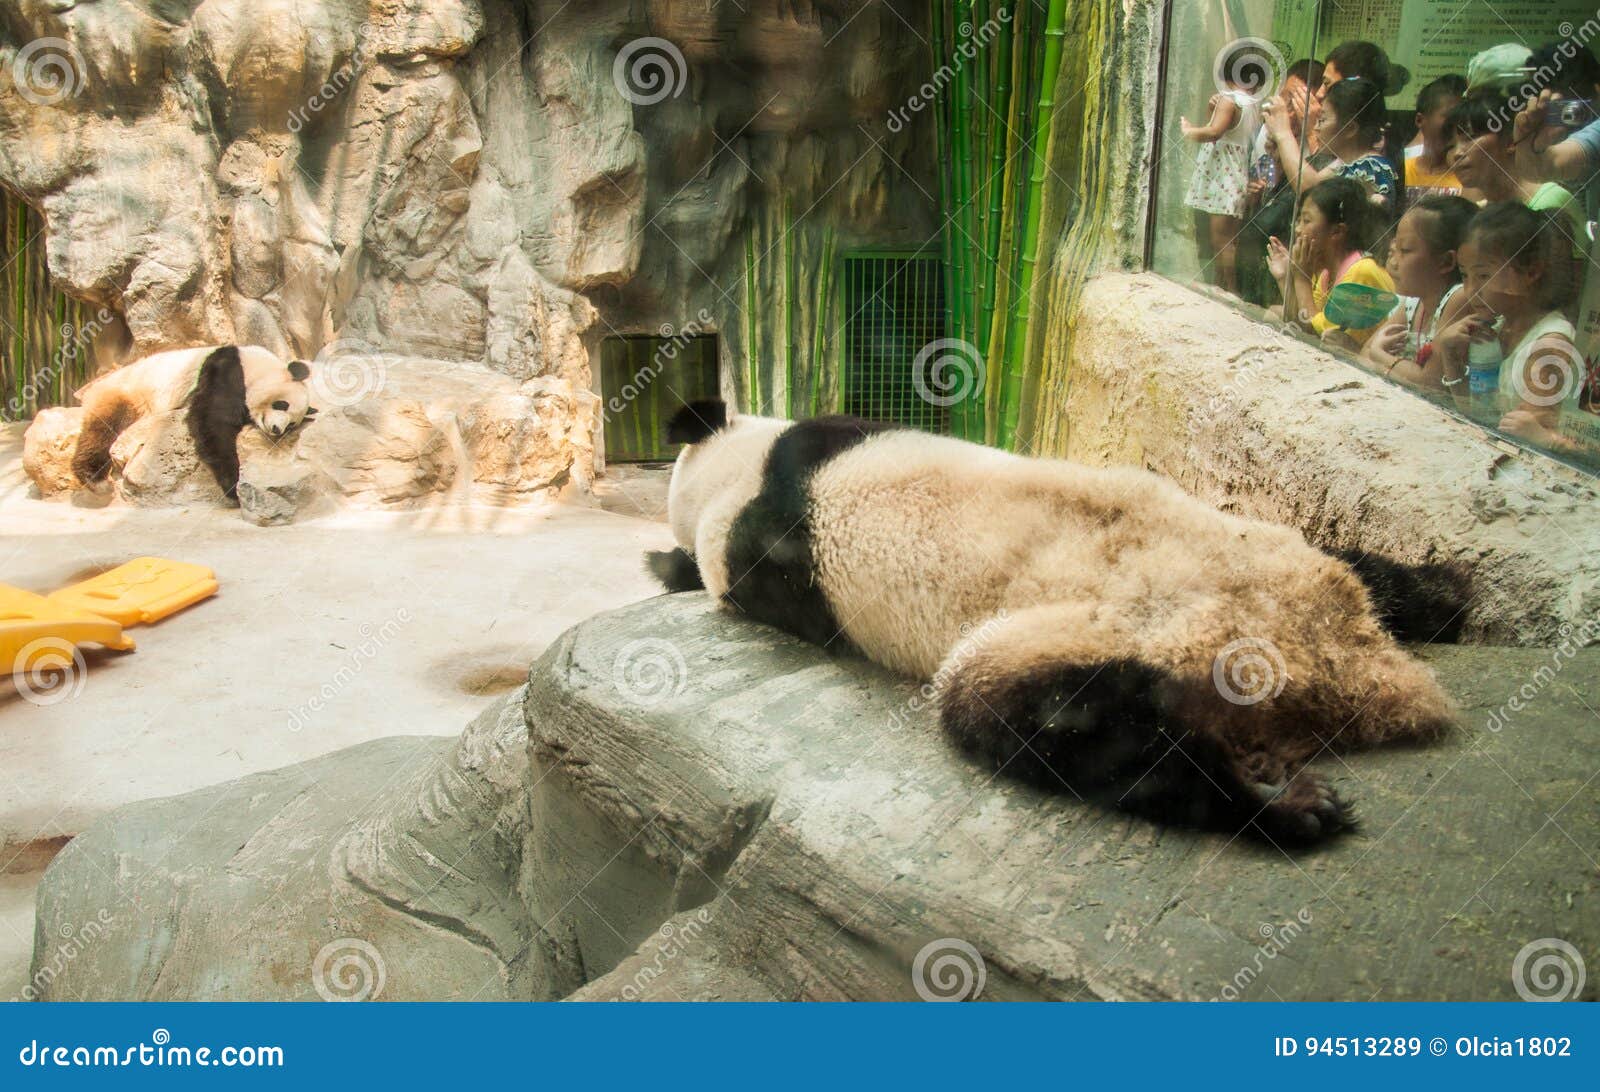 Animals in the Zoo in Beijing Editorial Stock Image - Image of kangaroo,  like: 94513289